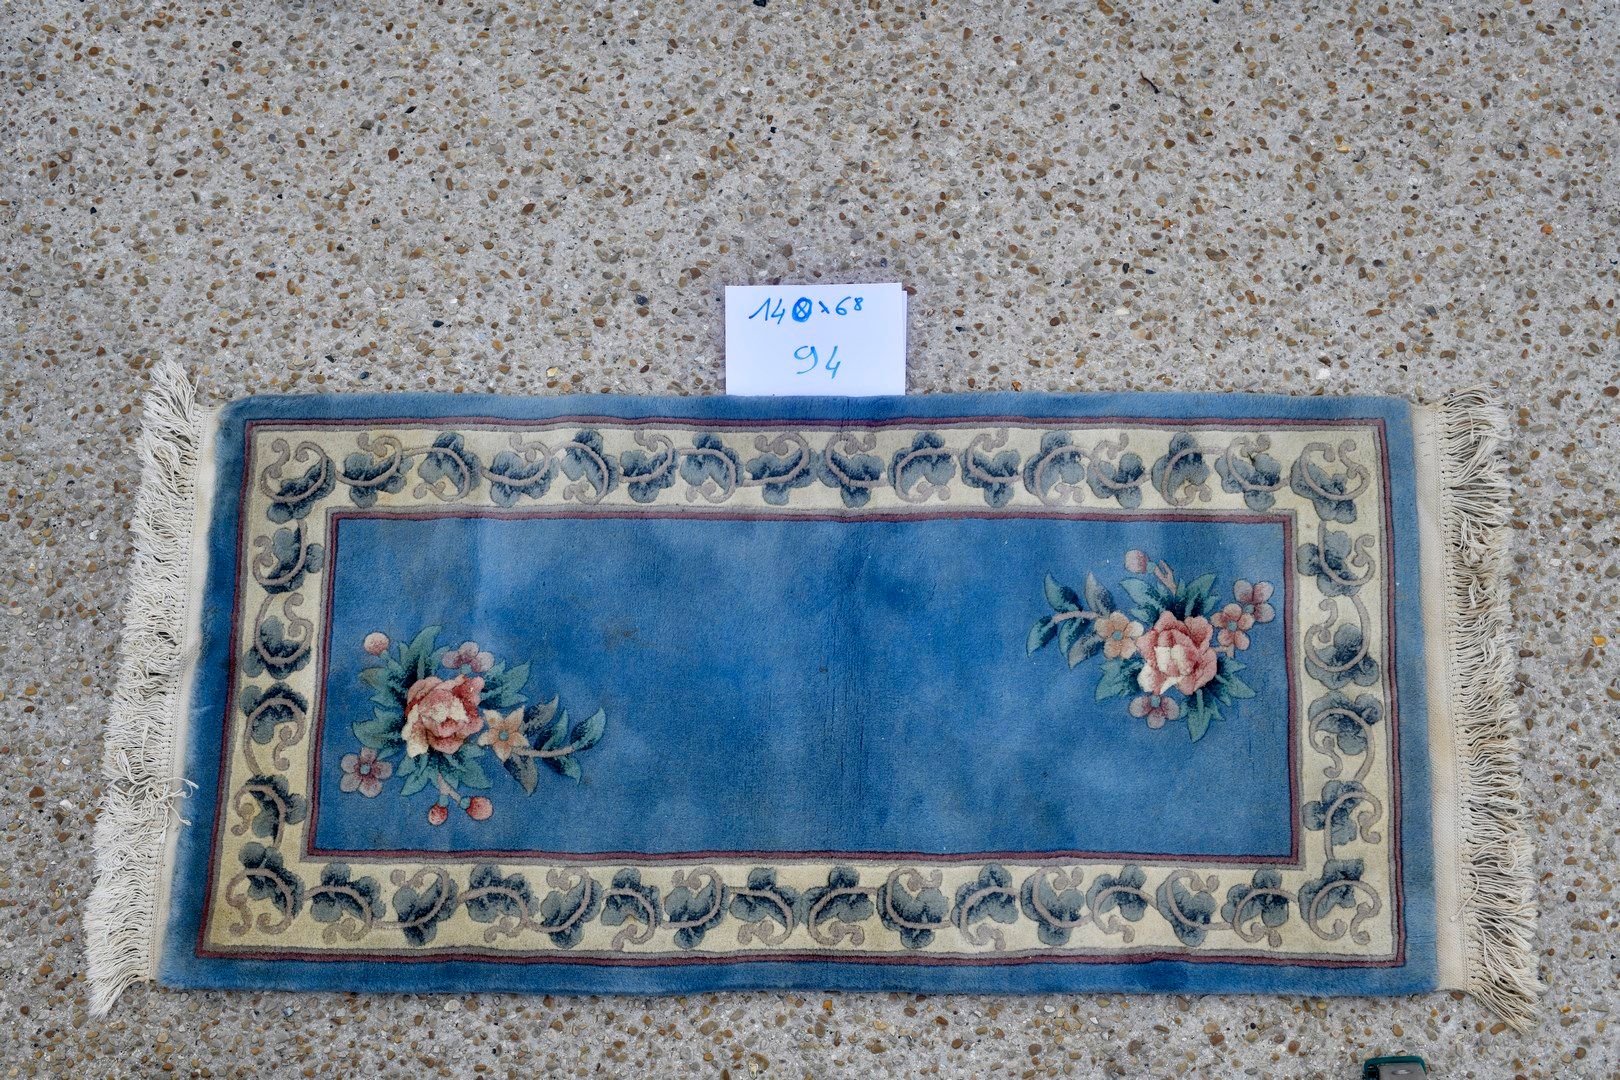 Null Tien Tsin（中国），1980年。

羊毛天鹅绒，棉质基础。 

天蓝色的场地上有双花束。

状况良好。 

140x68厘米